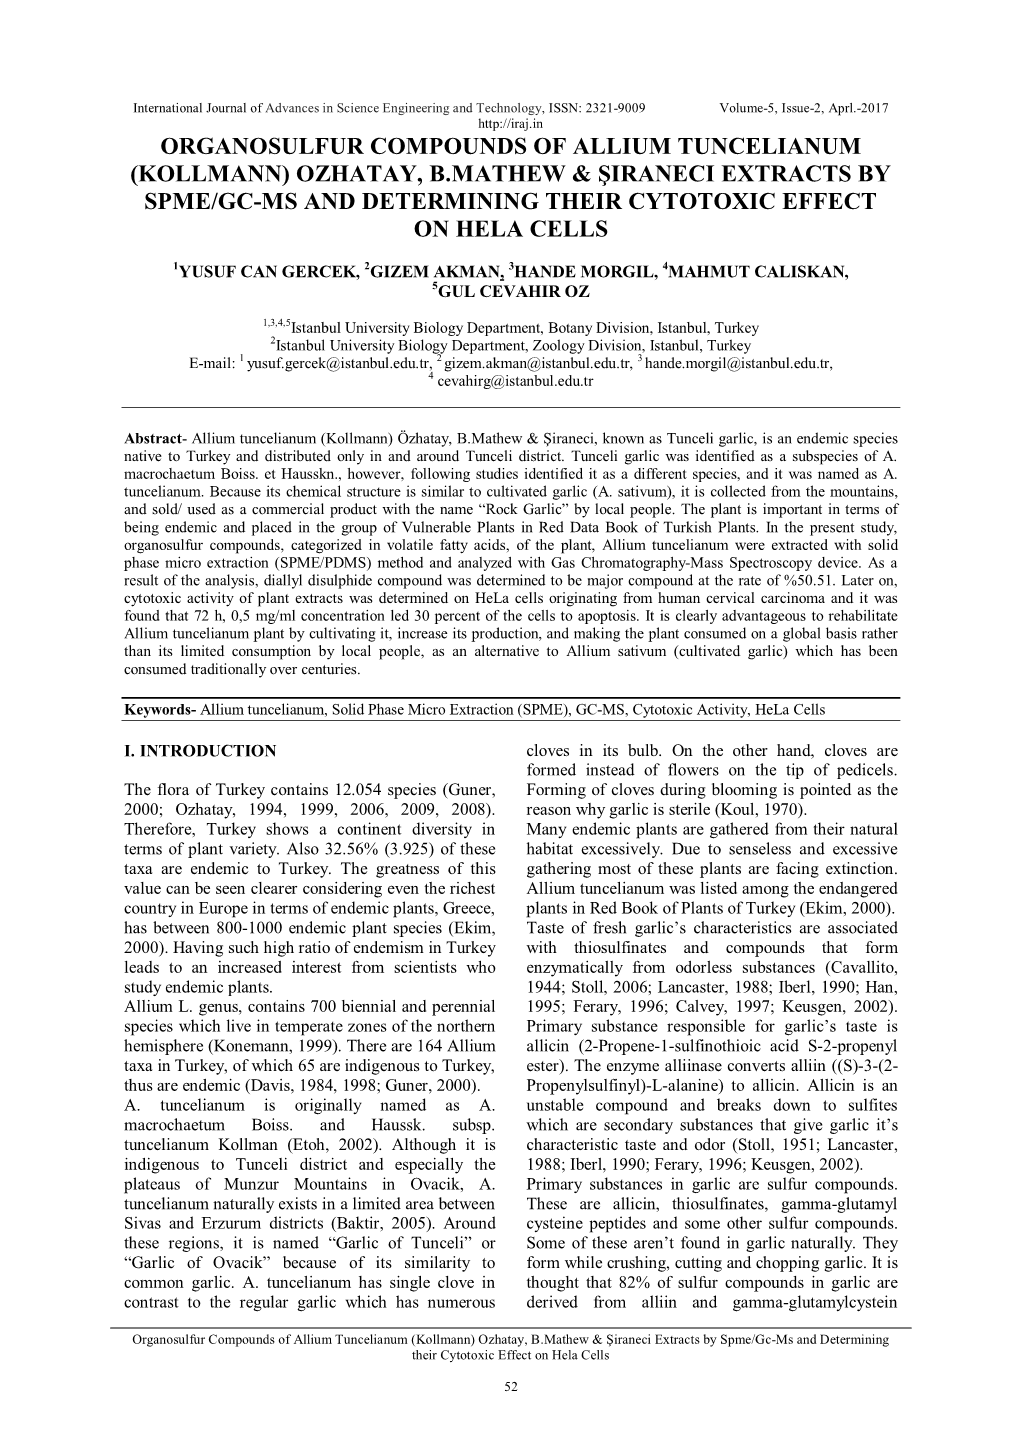 Organosulfur Compounds of Allium Tuncelianum (Kollmann) Ozhatay, B.Mathew & Şiraneci Extracts by Spme/Gc-Ms and Determining Their Cytotoxic Effect on Hela Cells